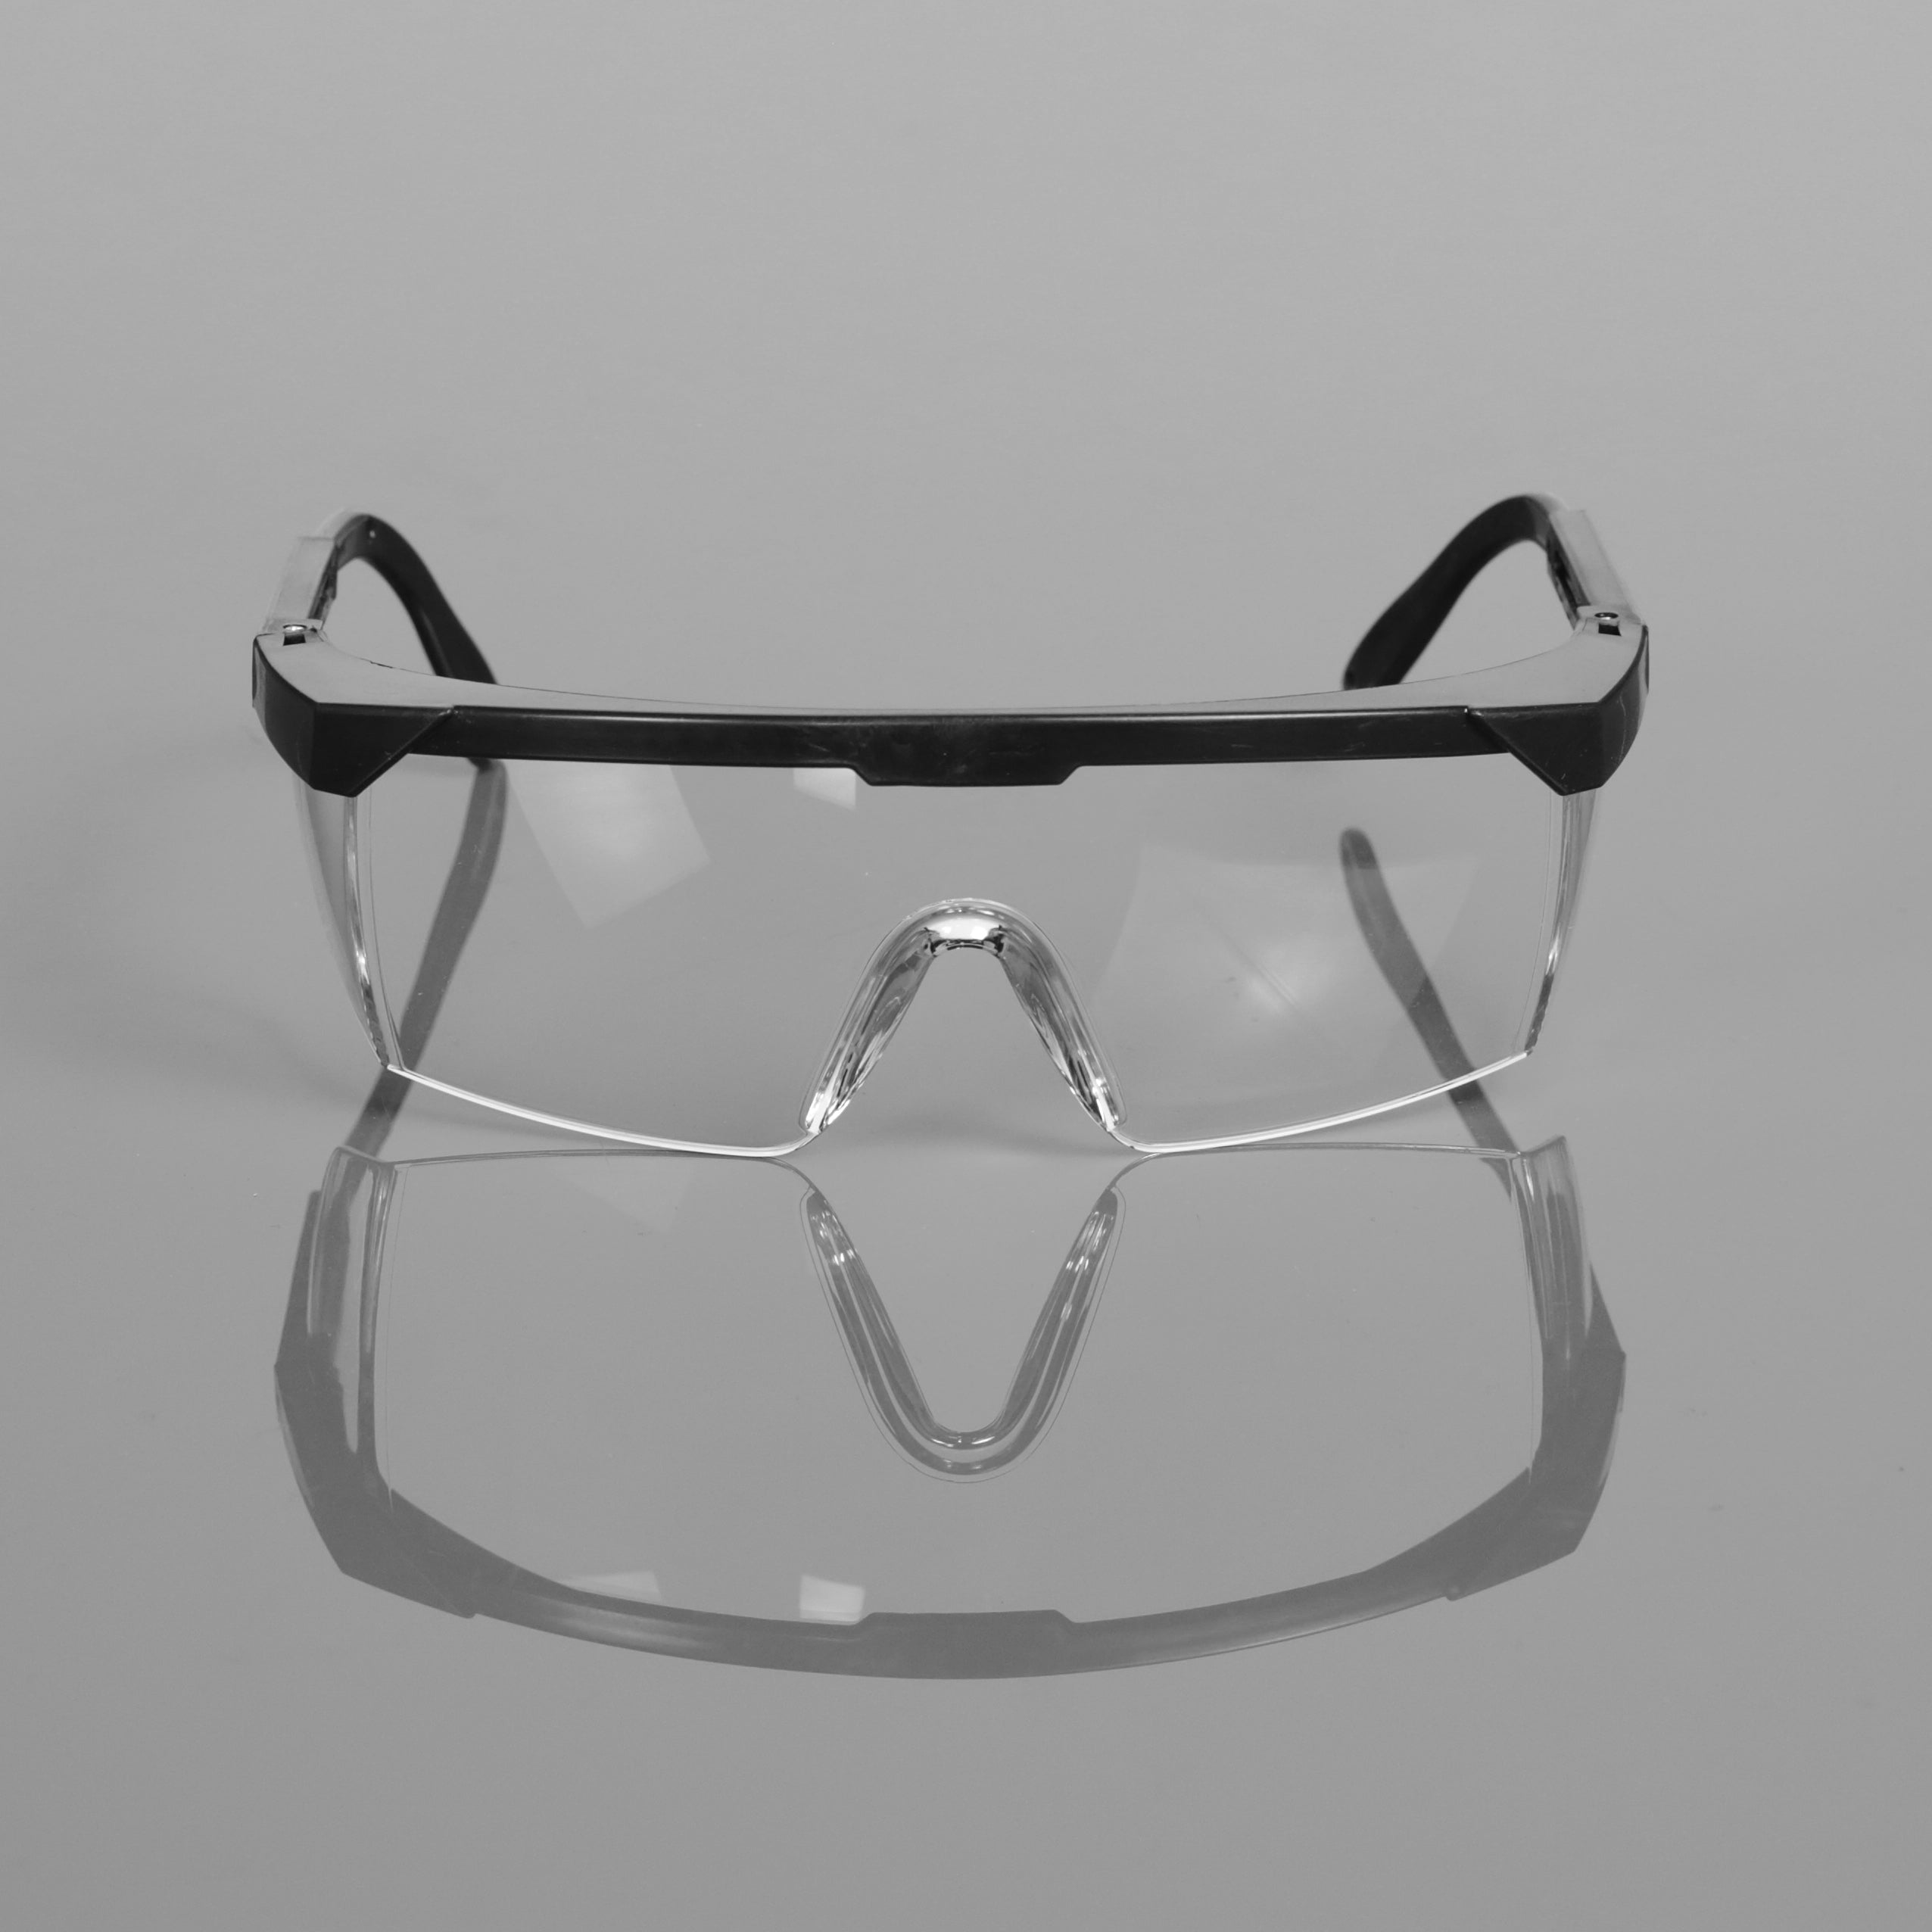 Ecosafe Proguard Series 46 Safety Eyewear - Black/Yellow